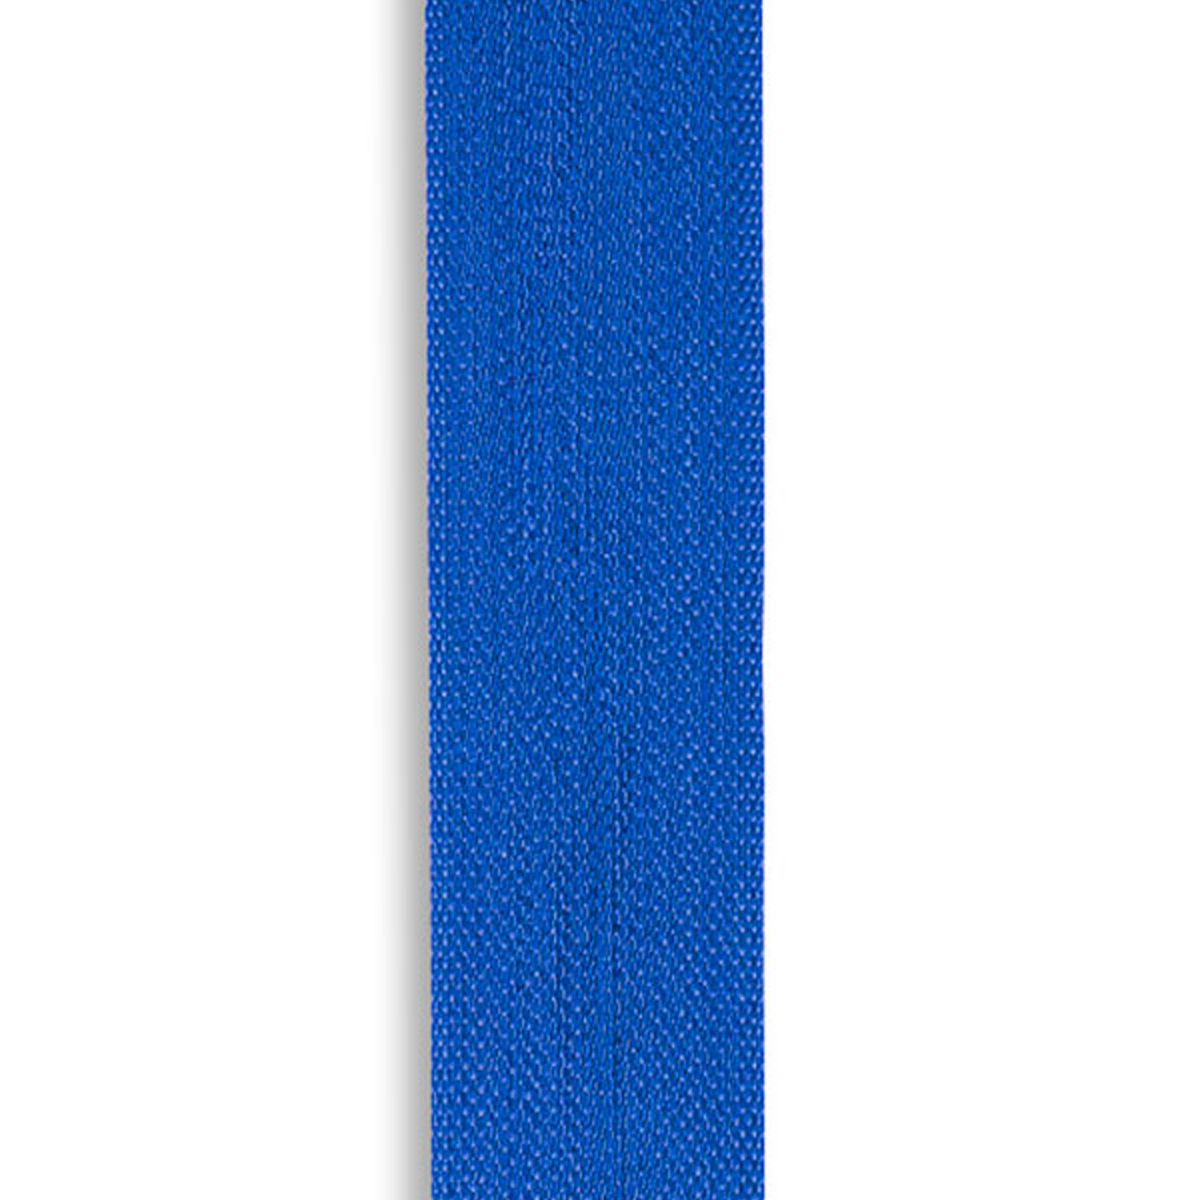 Seam Binding Rayon Ribbon 1/2-Inch x 100 Yards (109 - Olive) 